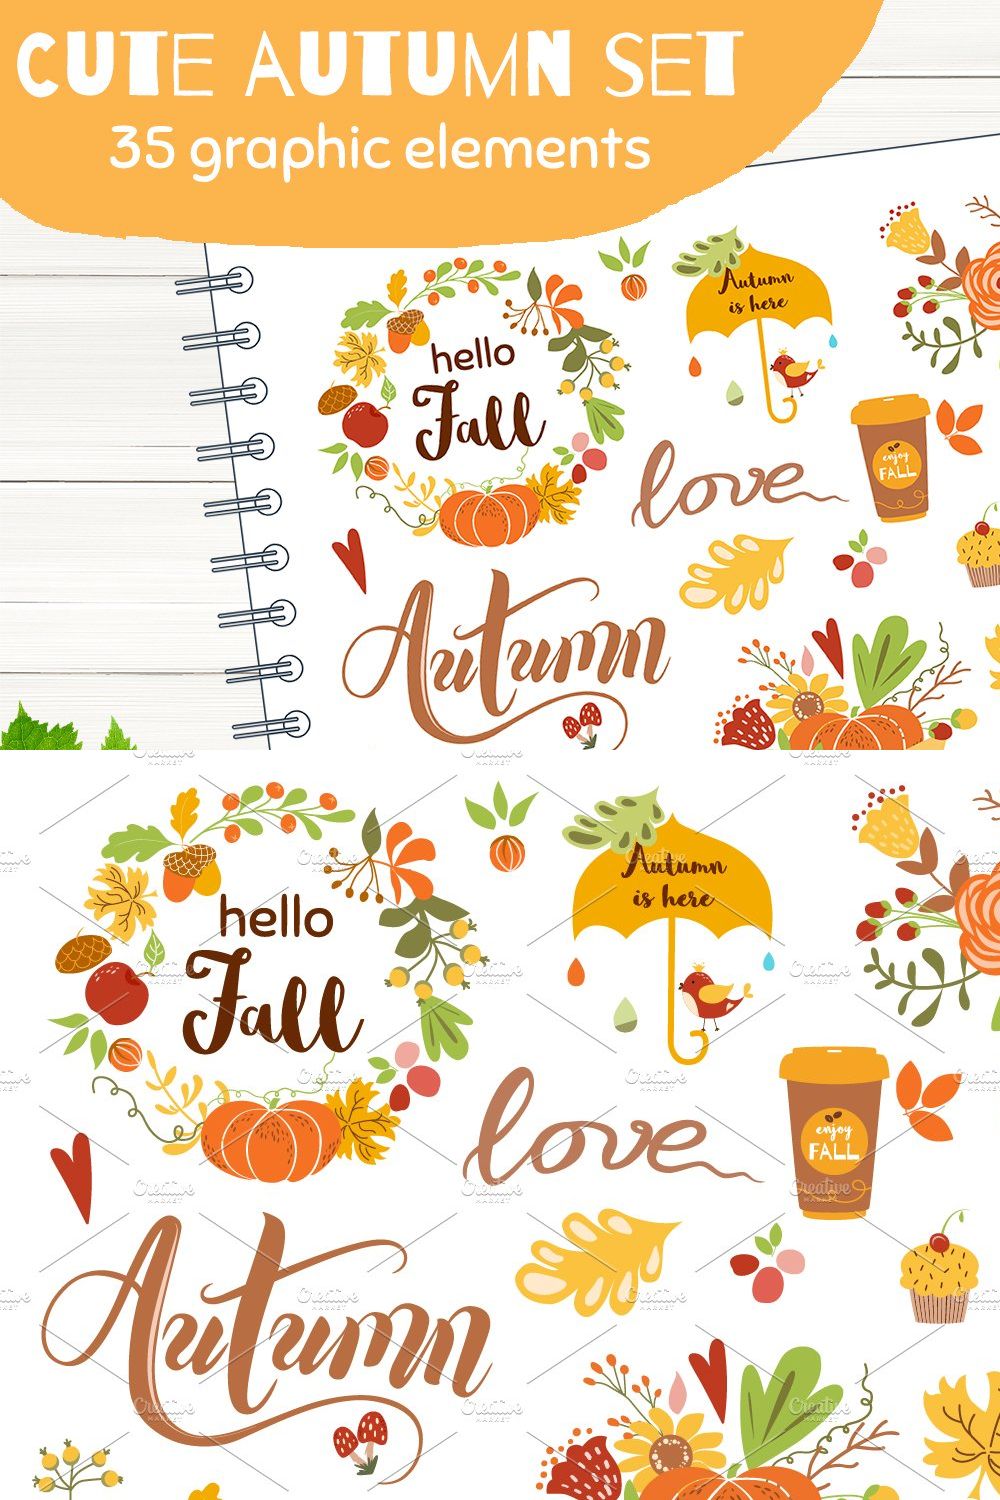 Cute fall clipart. Autumn logo set pinterest preview image.